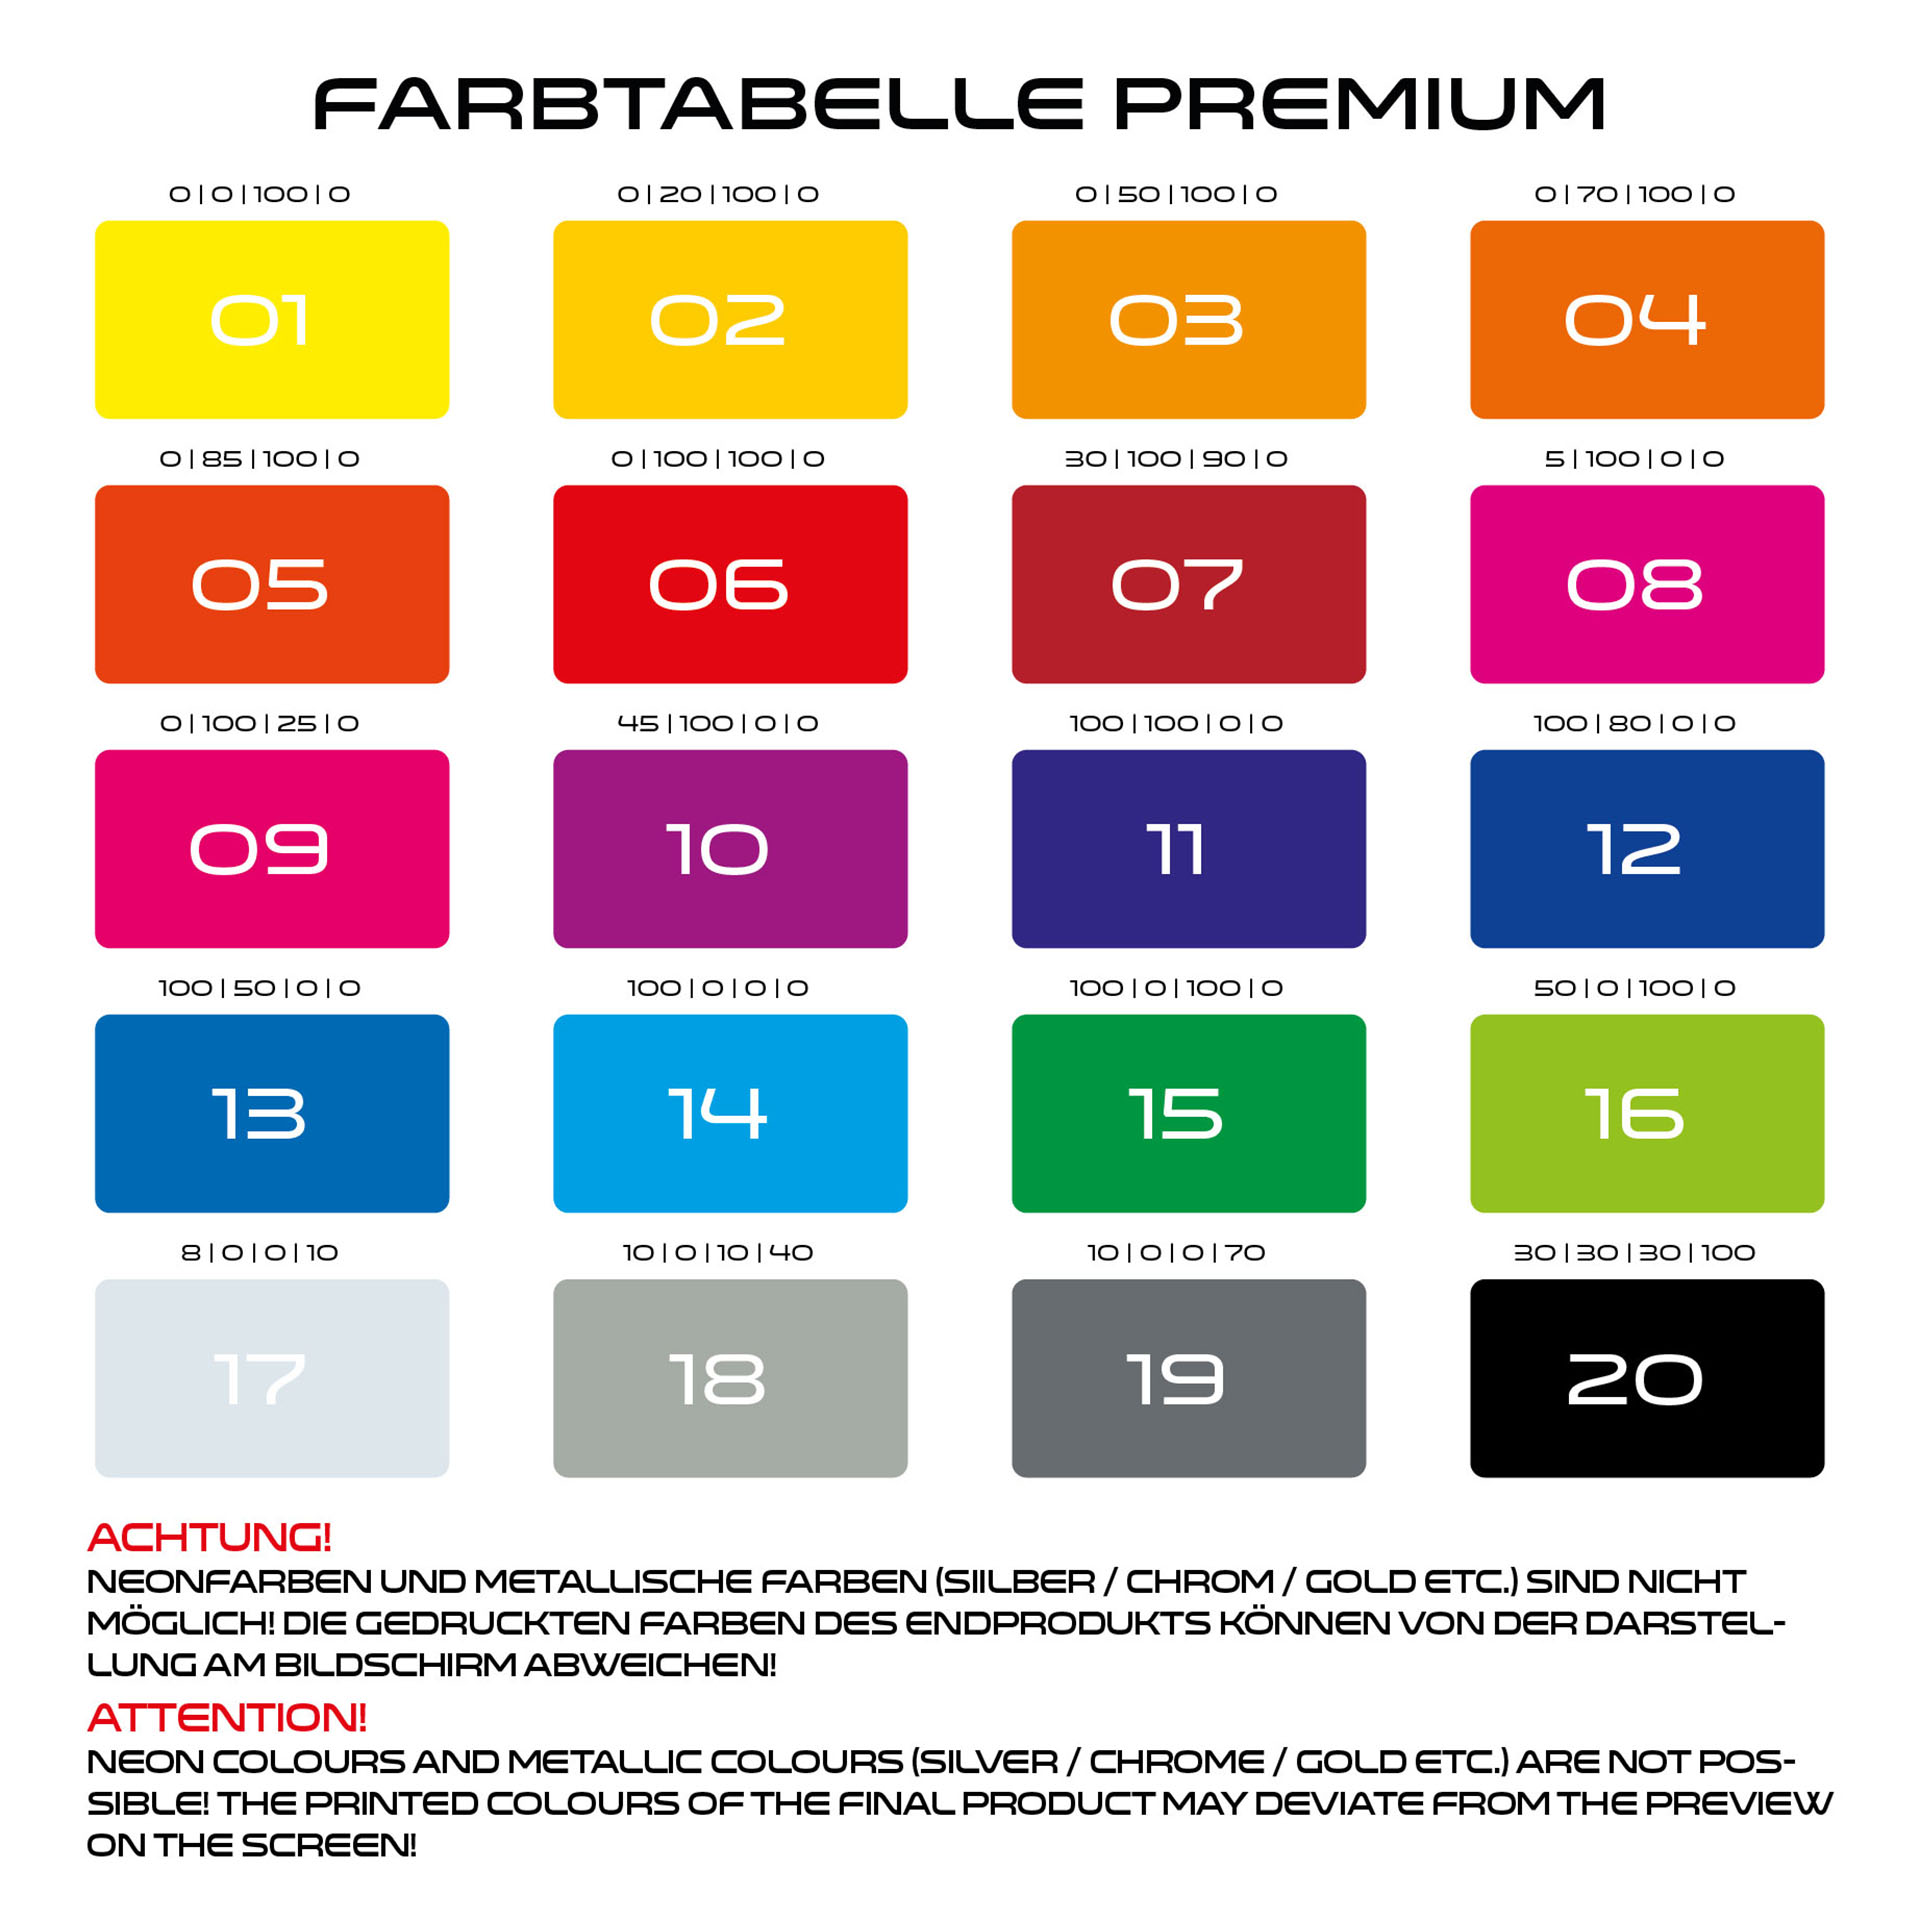 Cafe Racer Felgenaufkleber Premium Design Grid B Farbtabelle Premium Wheelsticker